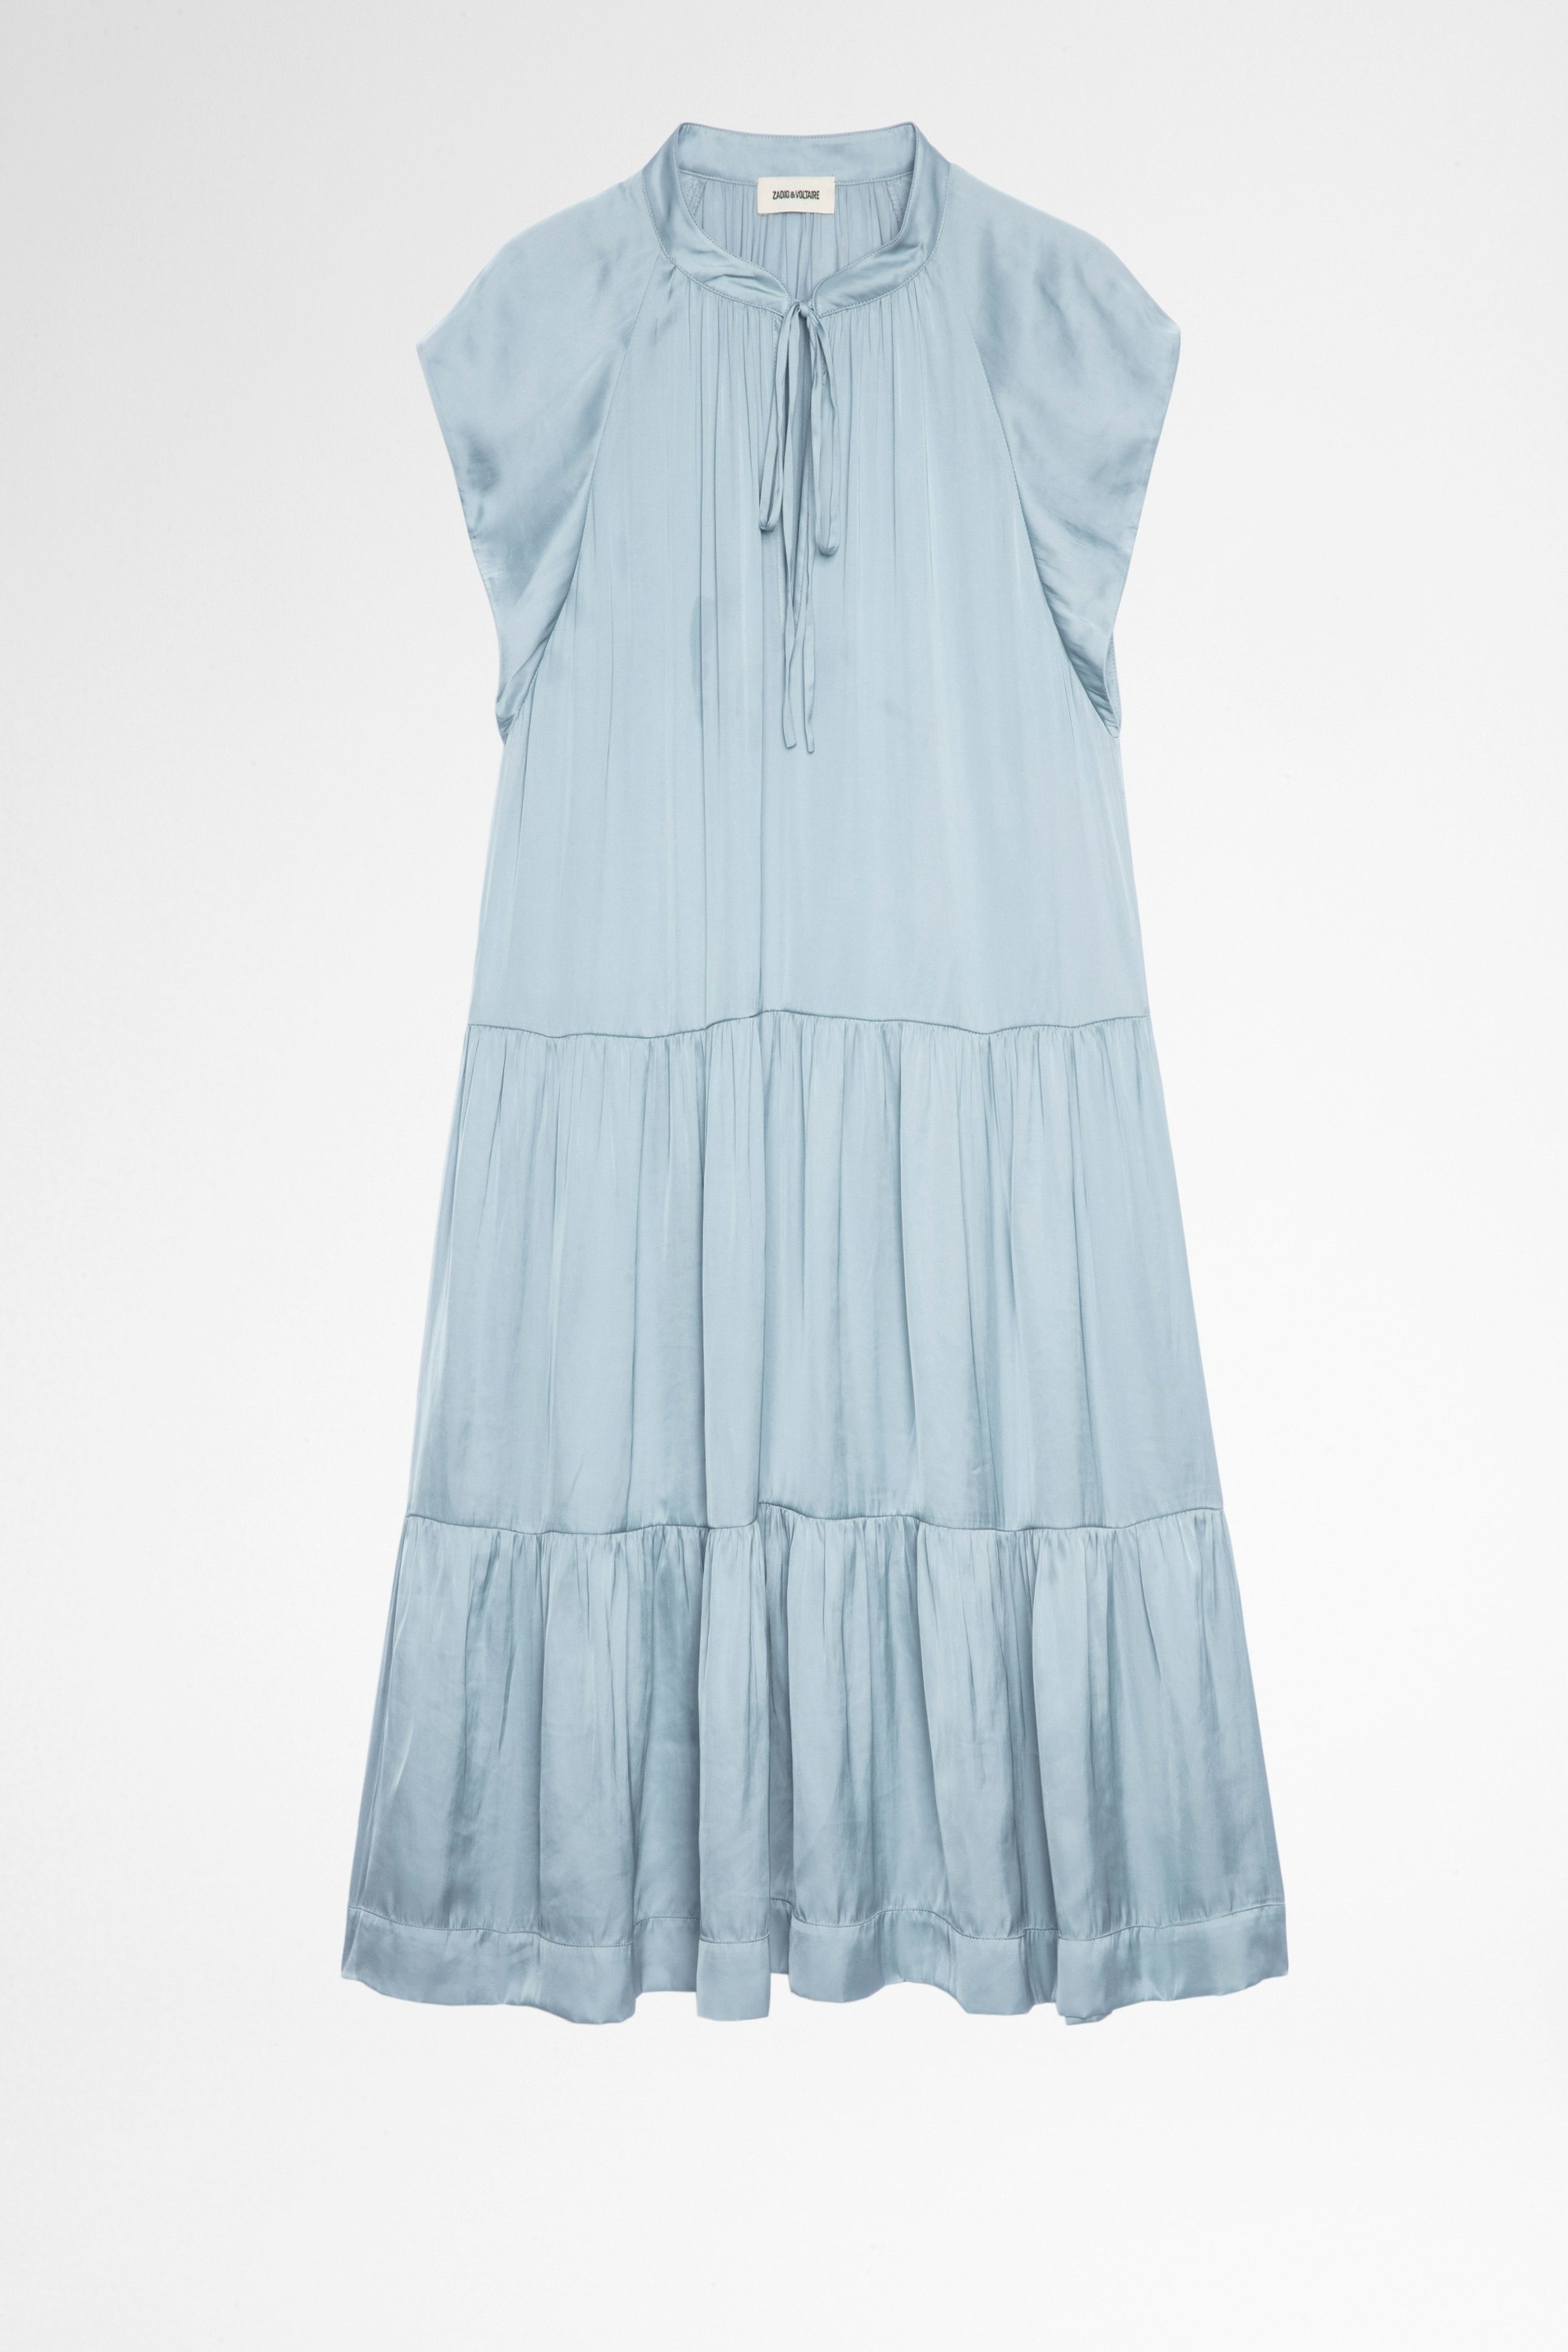 Rito Satin Dress Women's satin dress in sky-blue